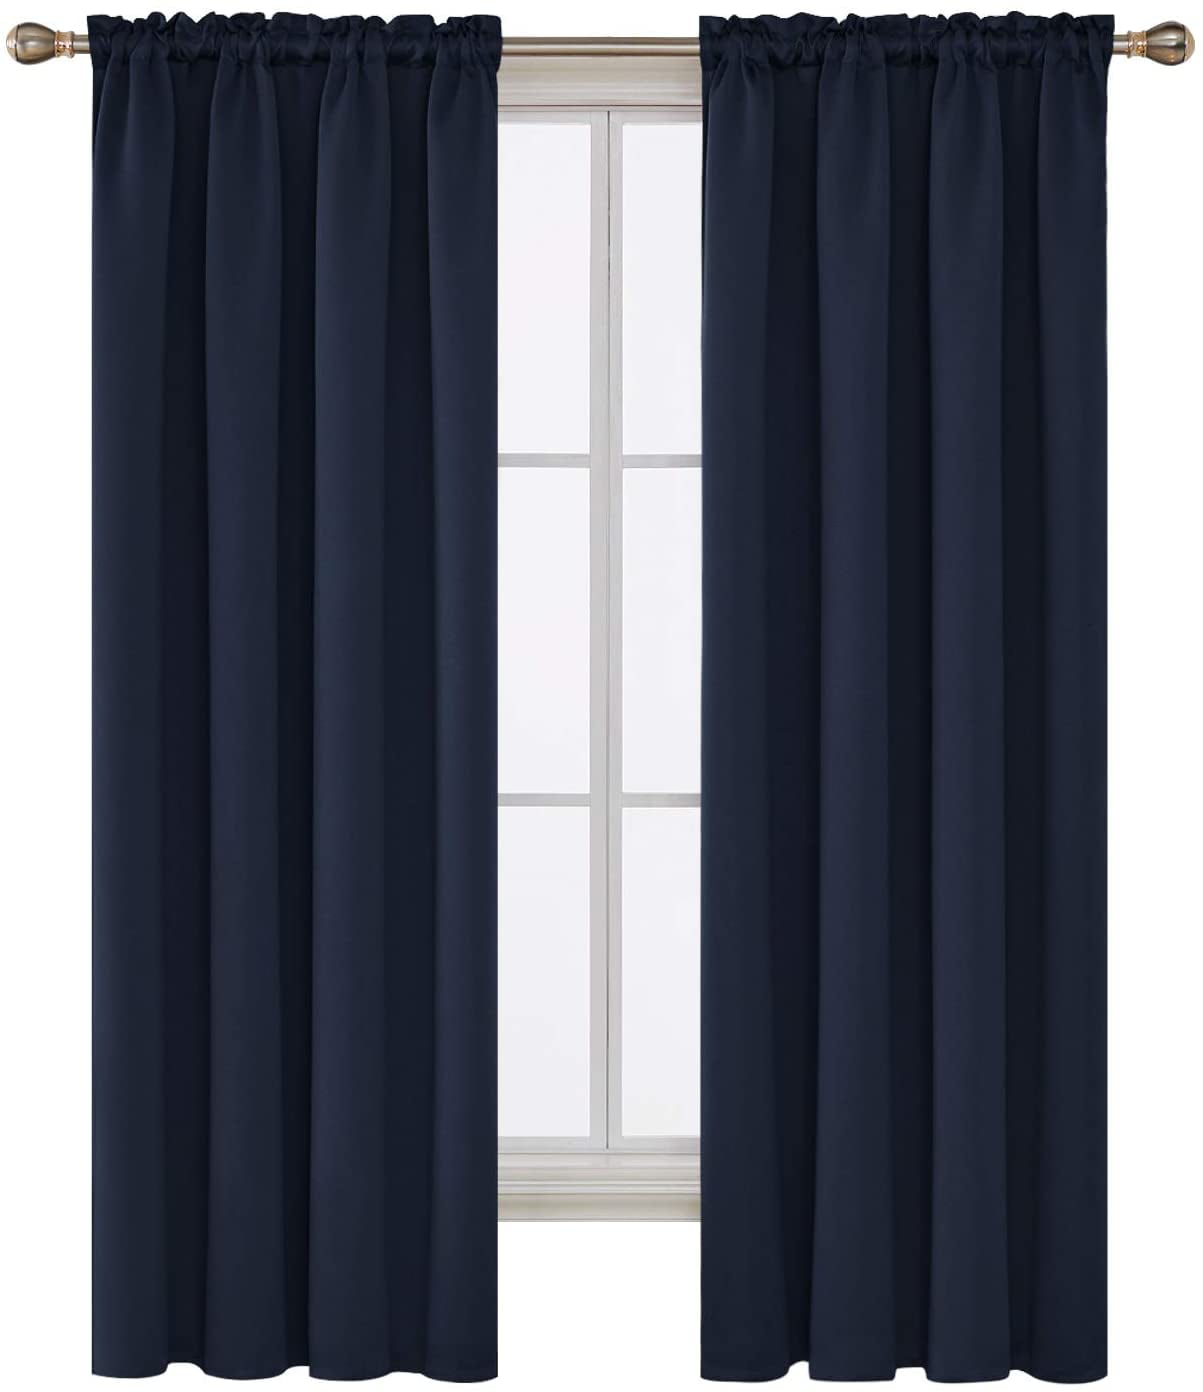 Deconovo Navy Blue Blackout Curtains Rod Pocket Curtain Panels Room